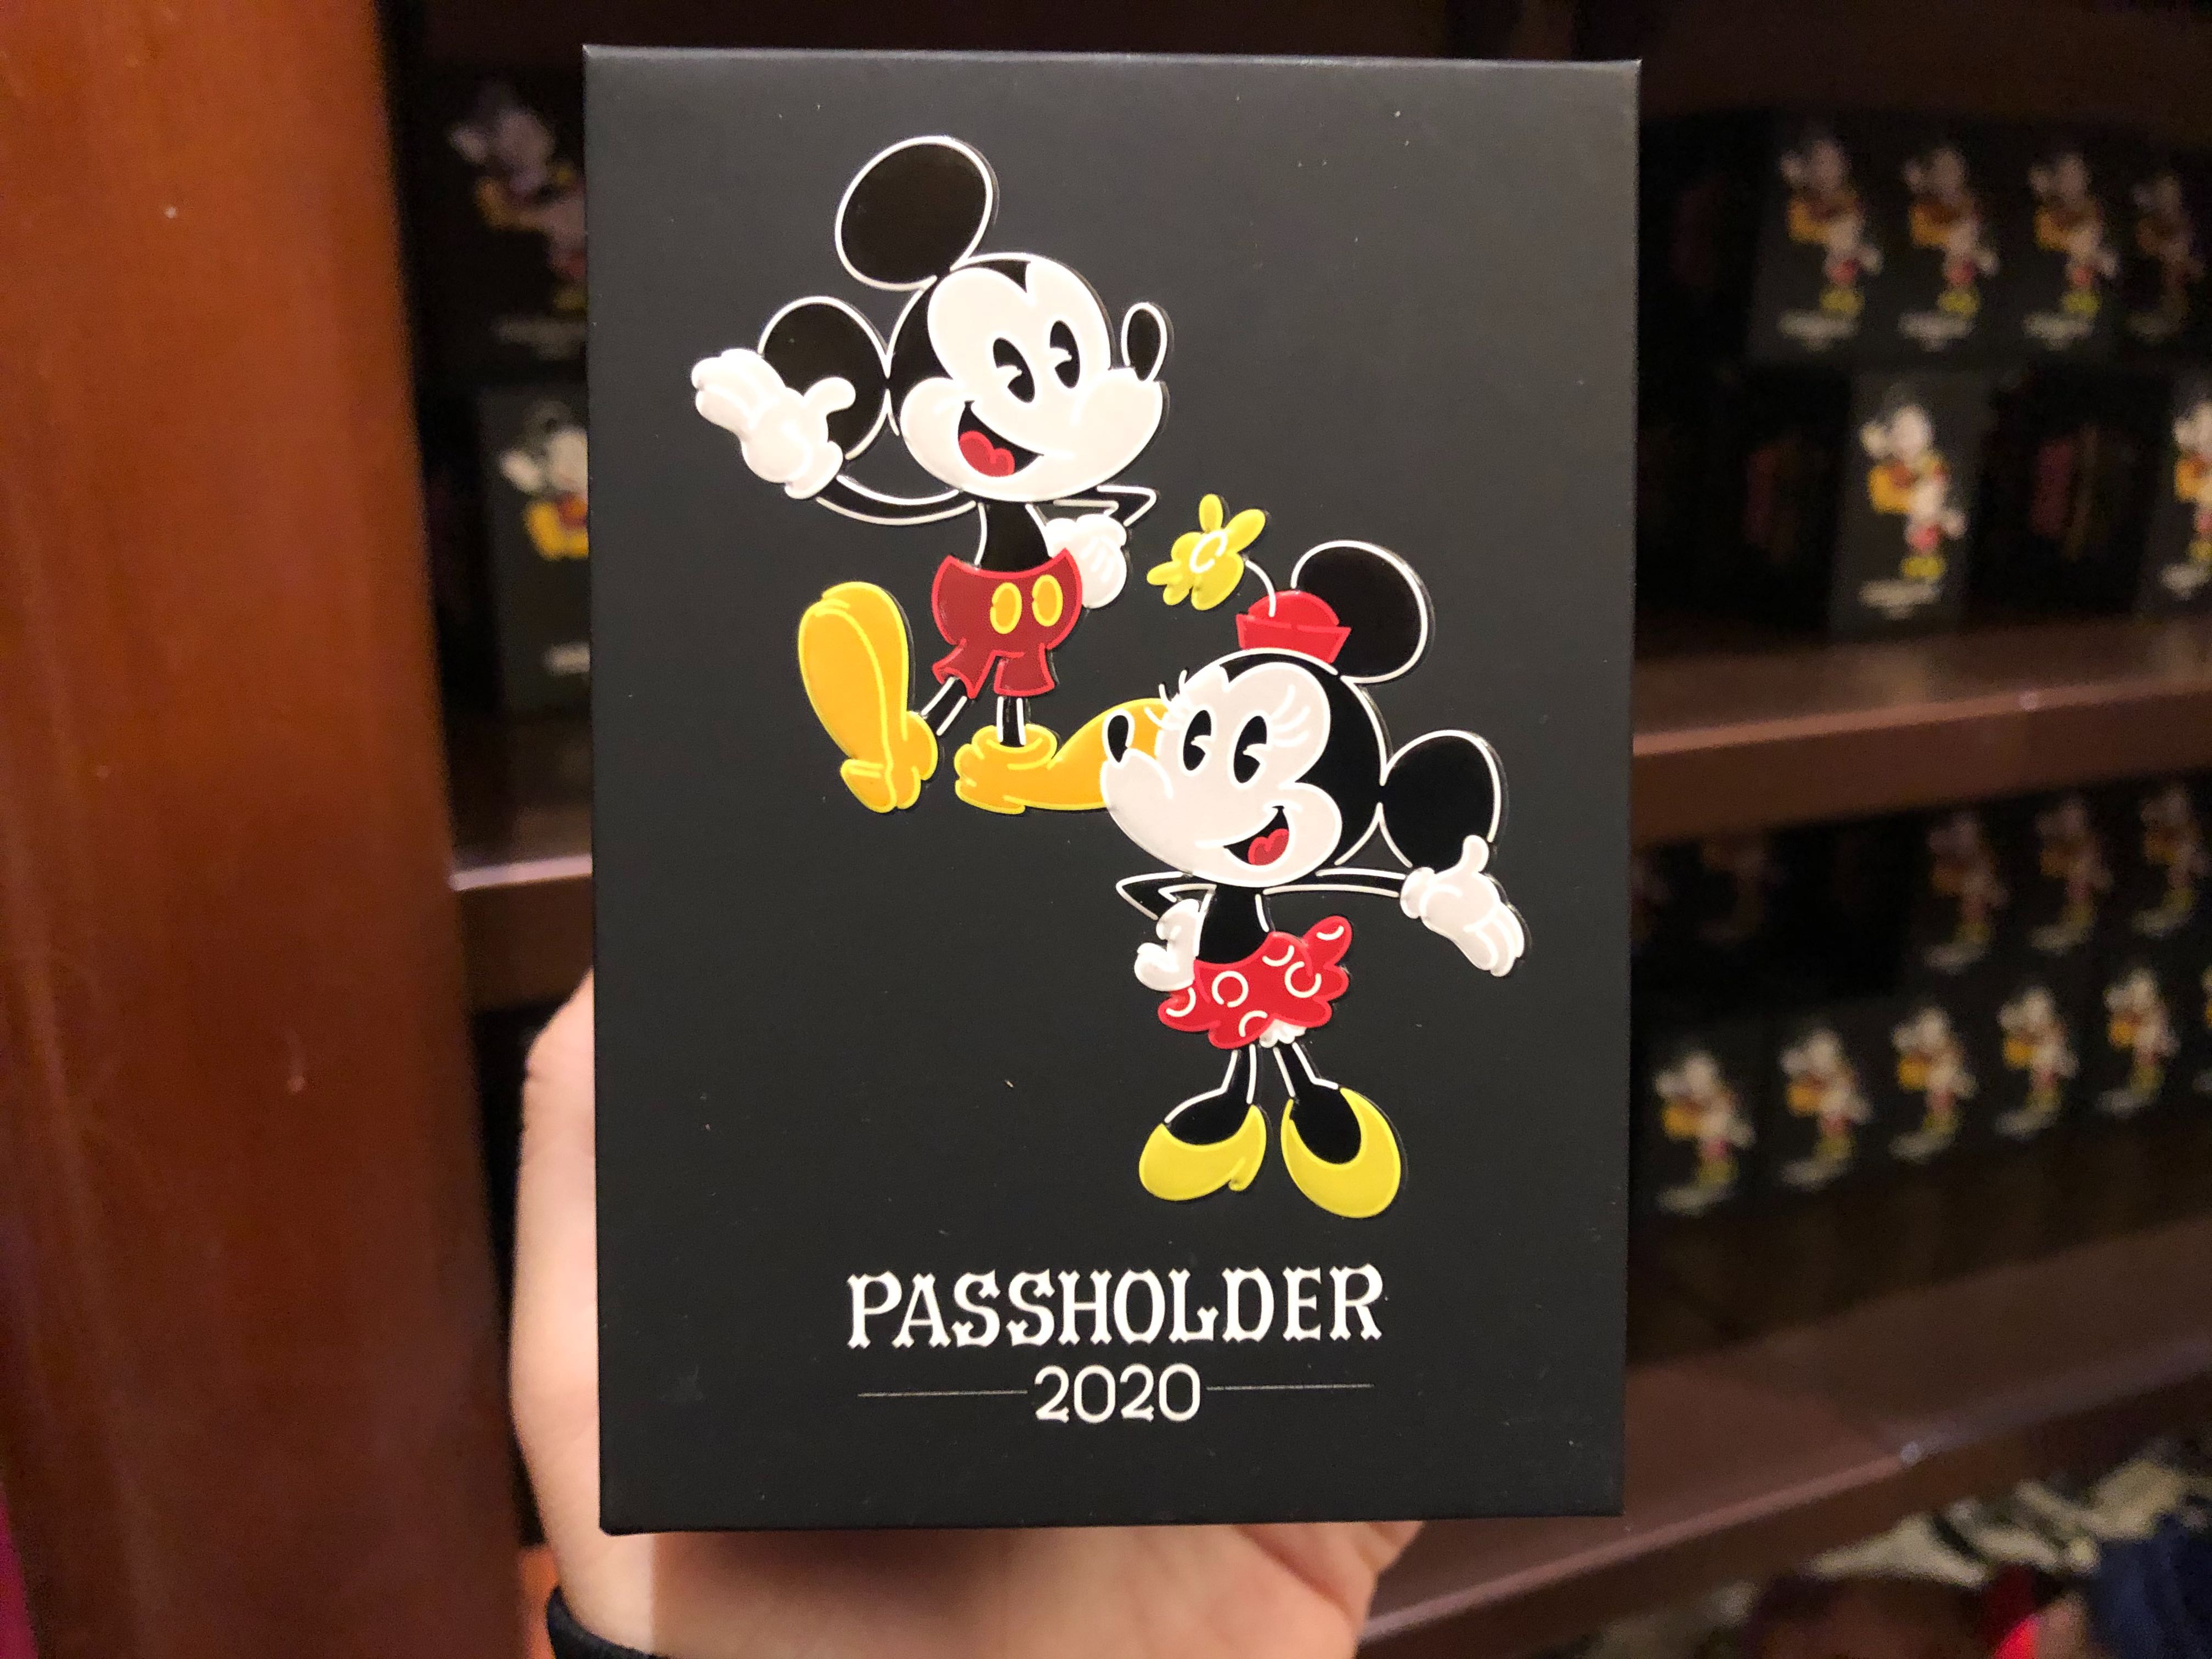 *NEW Disney Passholder Mickey Minnie Mouse Runaway Railway Opening Day Pin 2020